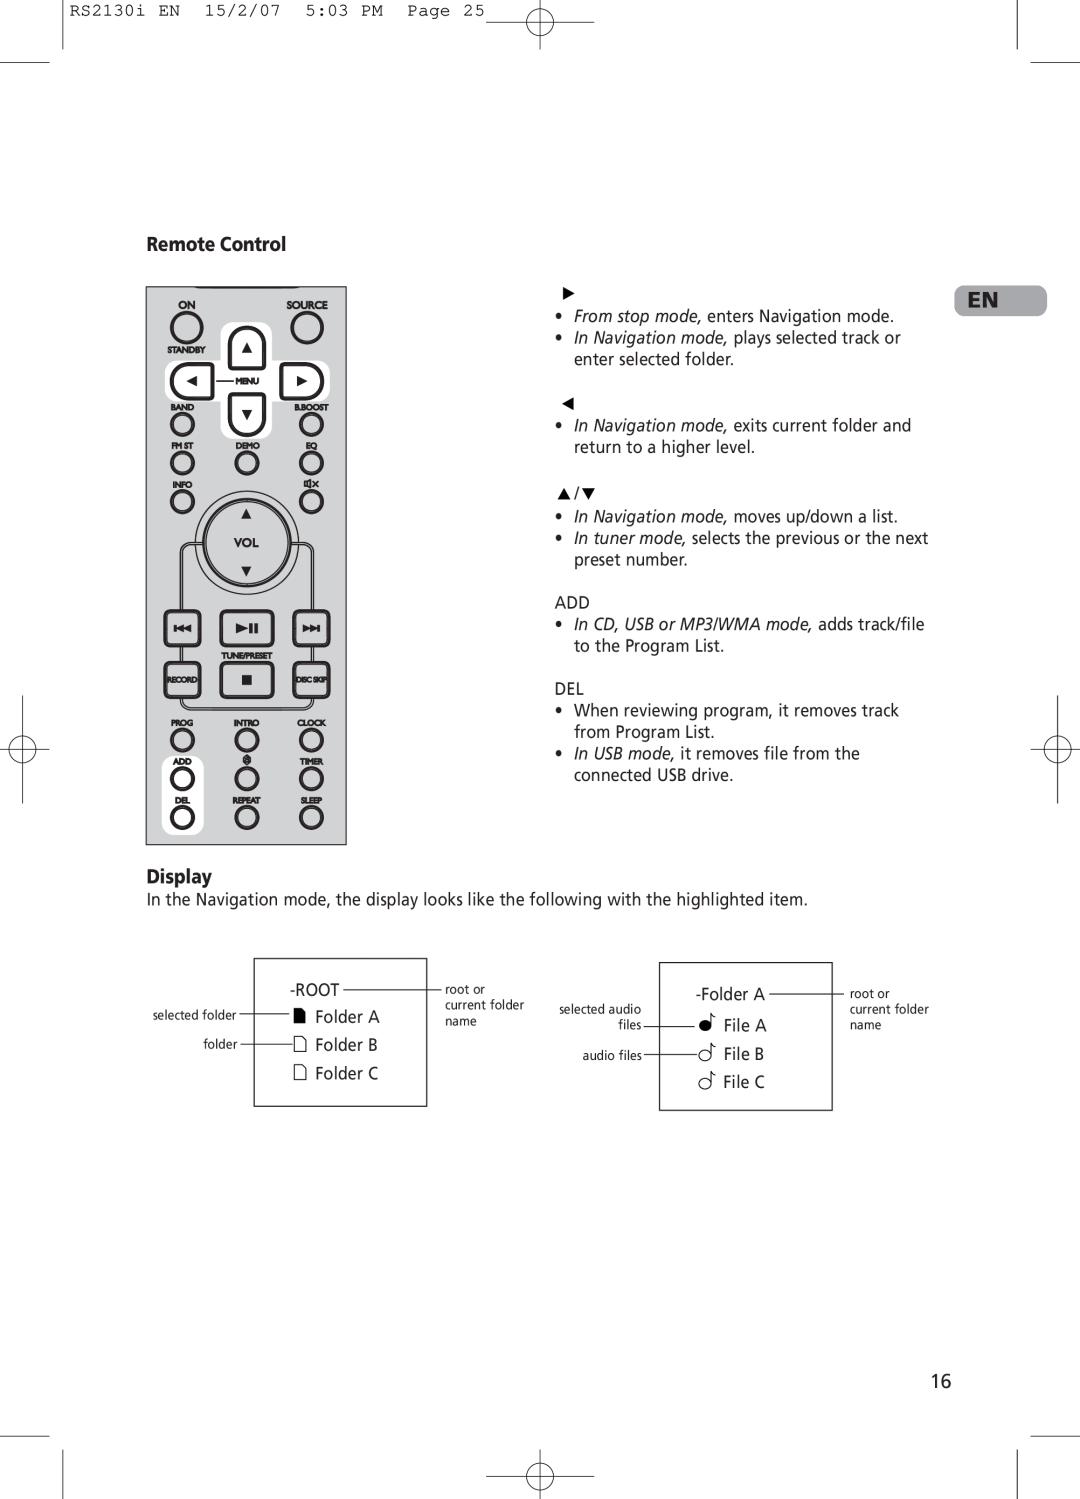 RCA RS2130i user manual Remote Control, Display 